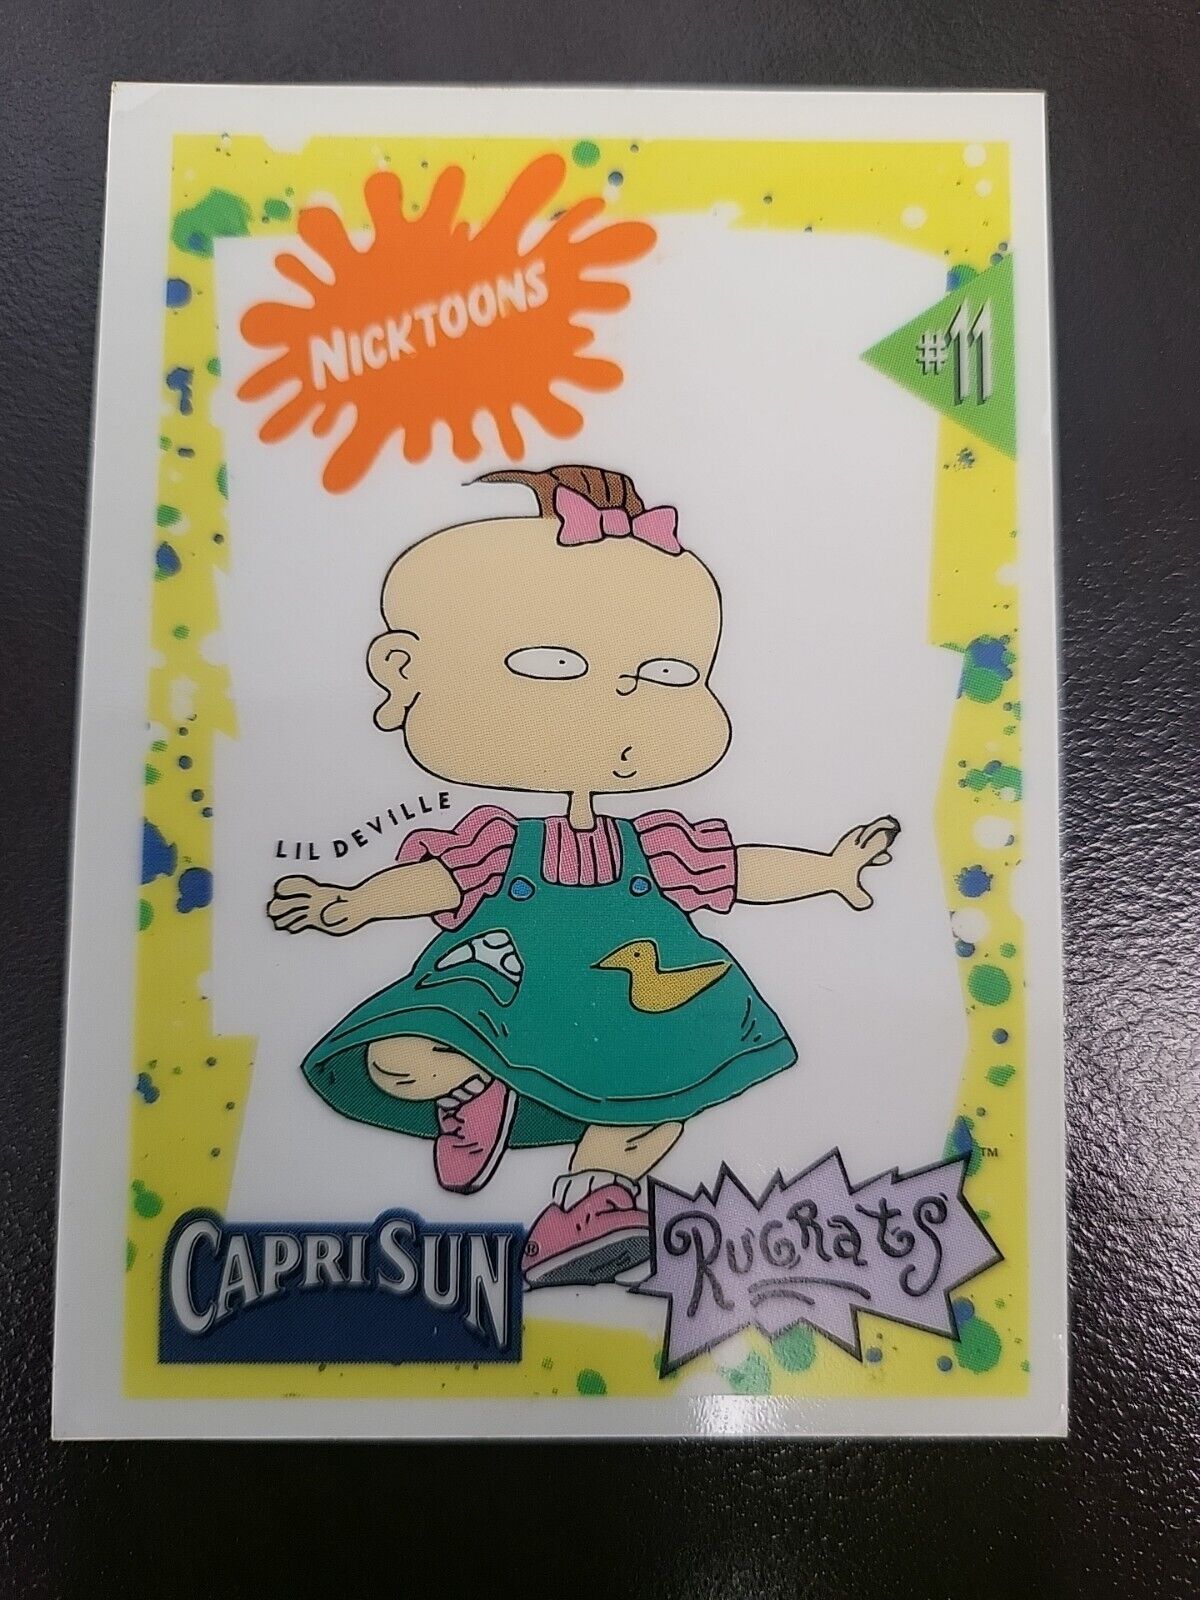 1992 Capri Sun Rugrats Lil Deville Nickelodeon Nicktoons DECAL Sticker card #11